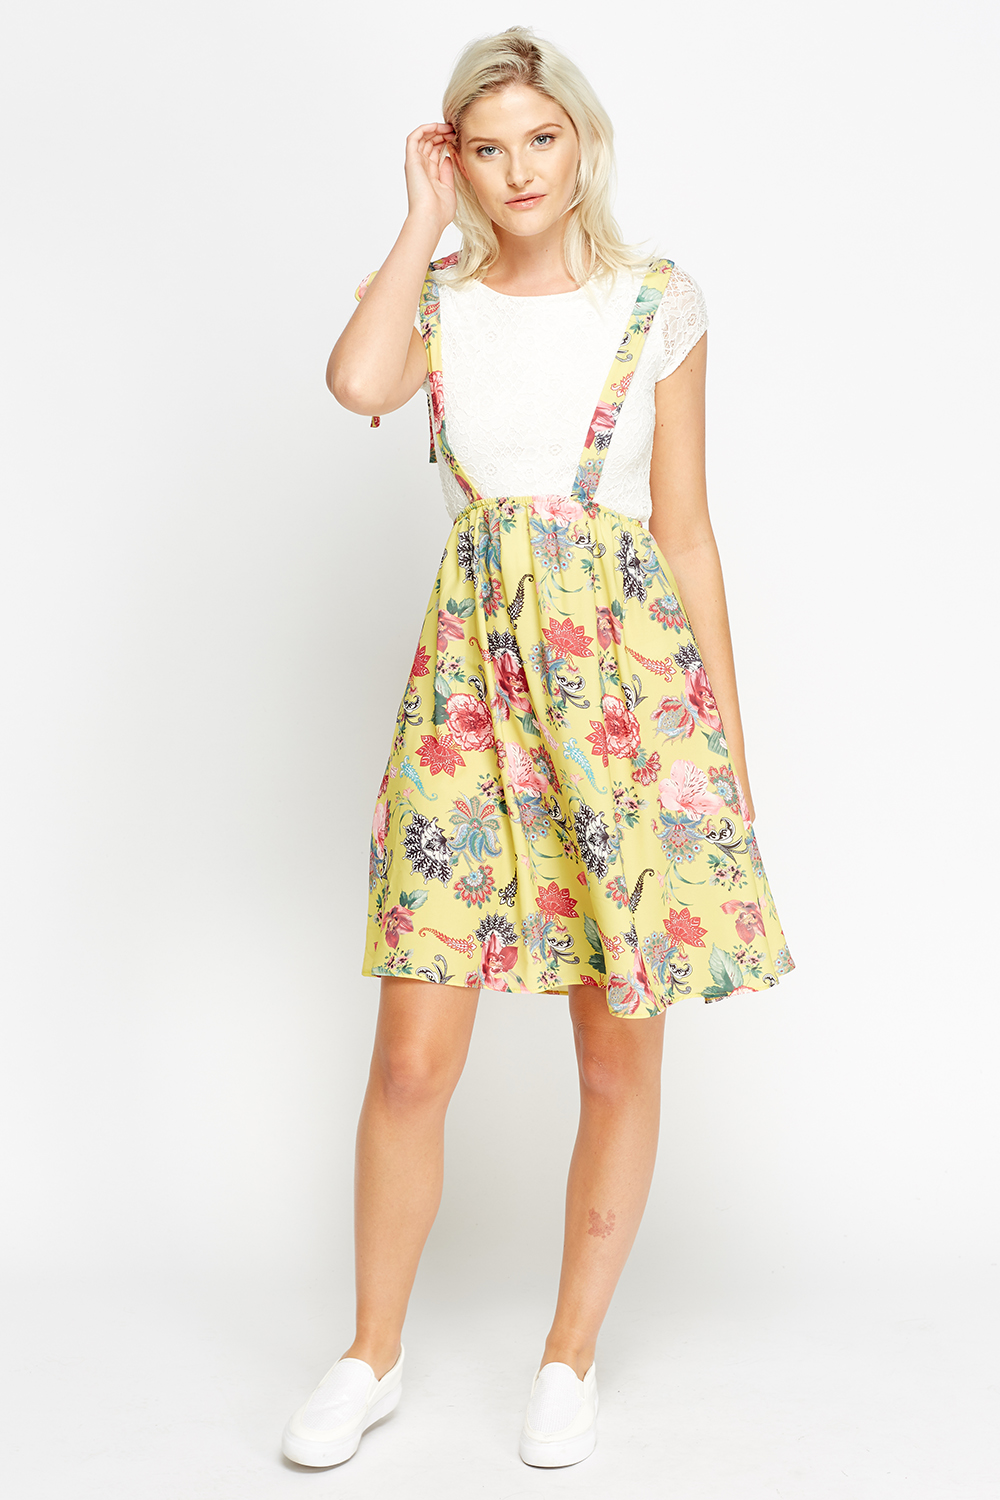 Floral Skirt Dungaree Dress Just 7